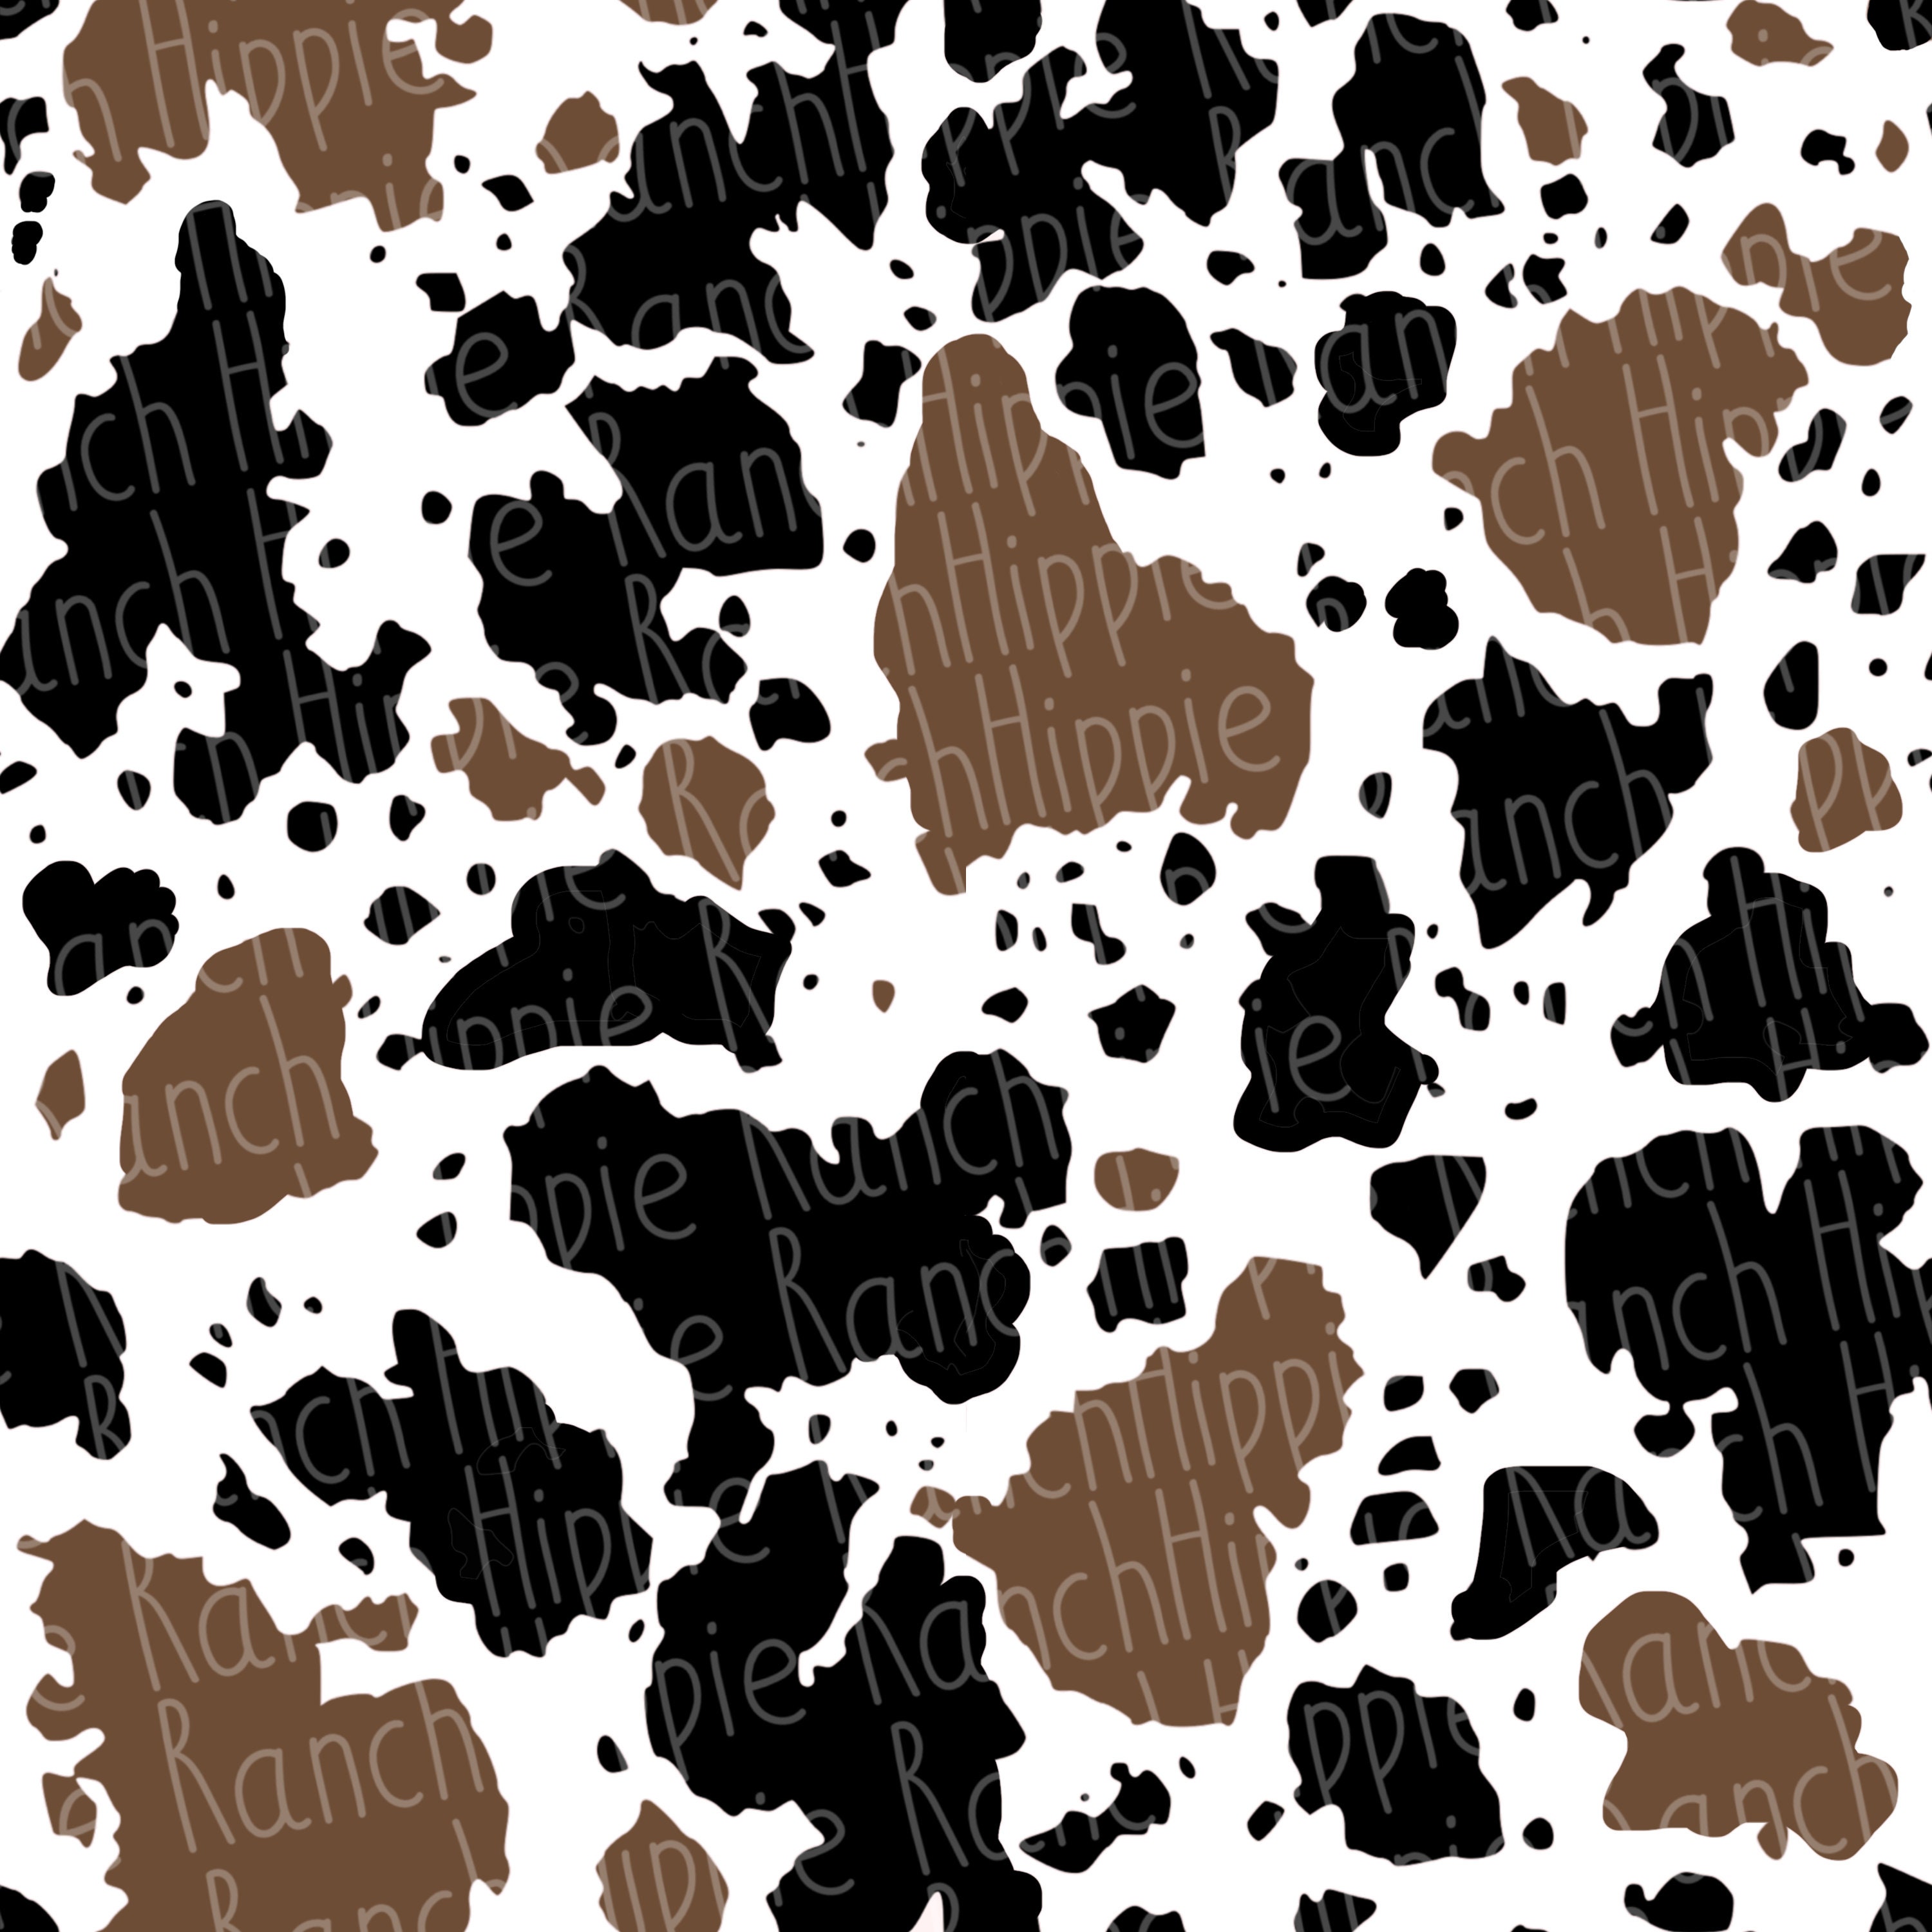 Brown Cow Print Wallpaper  Cow print wallpaper, Cow wallpaper